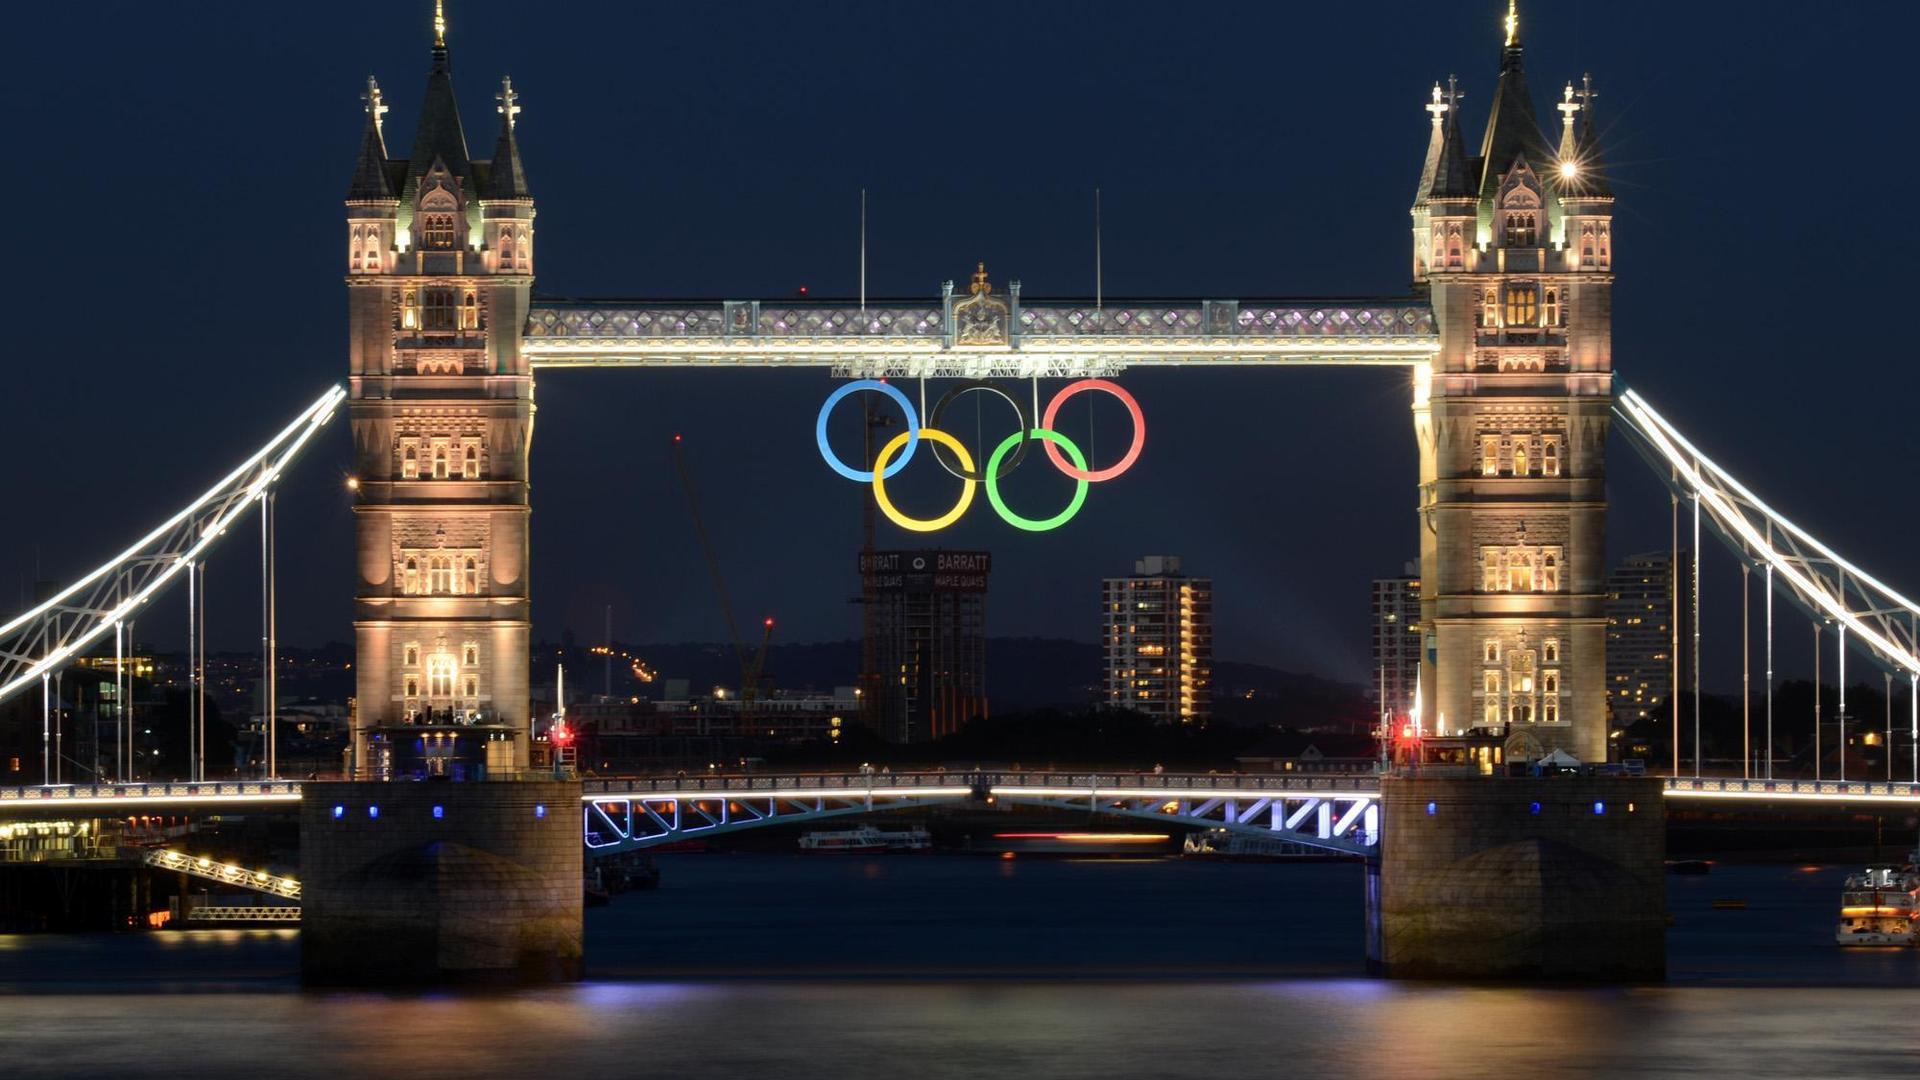 London Bridge 2012 Olympics for 1920 x 1080 HDTV 1080p resolution